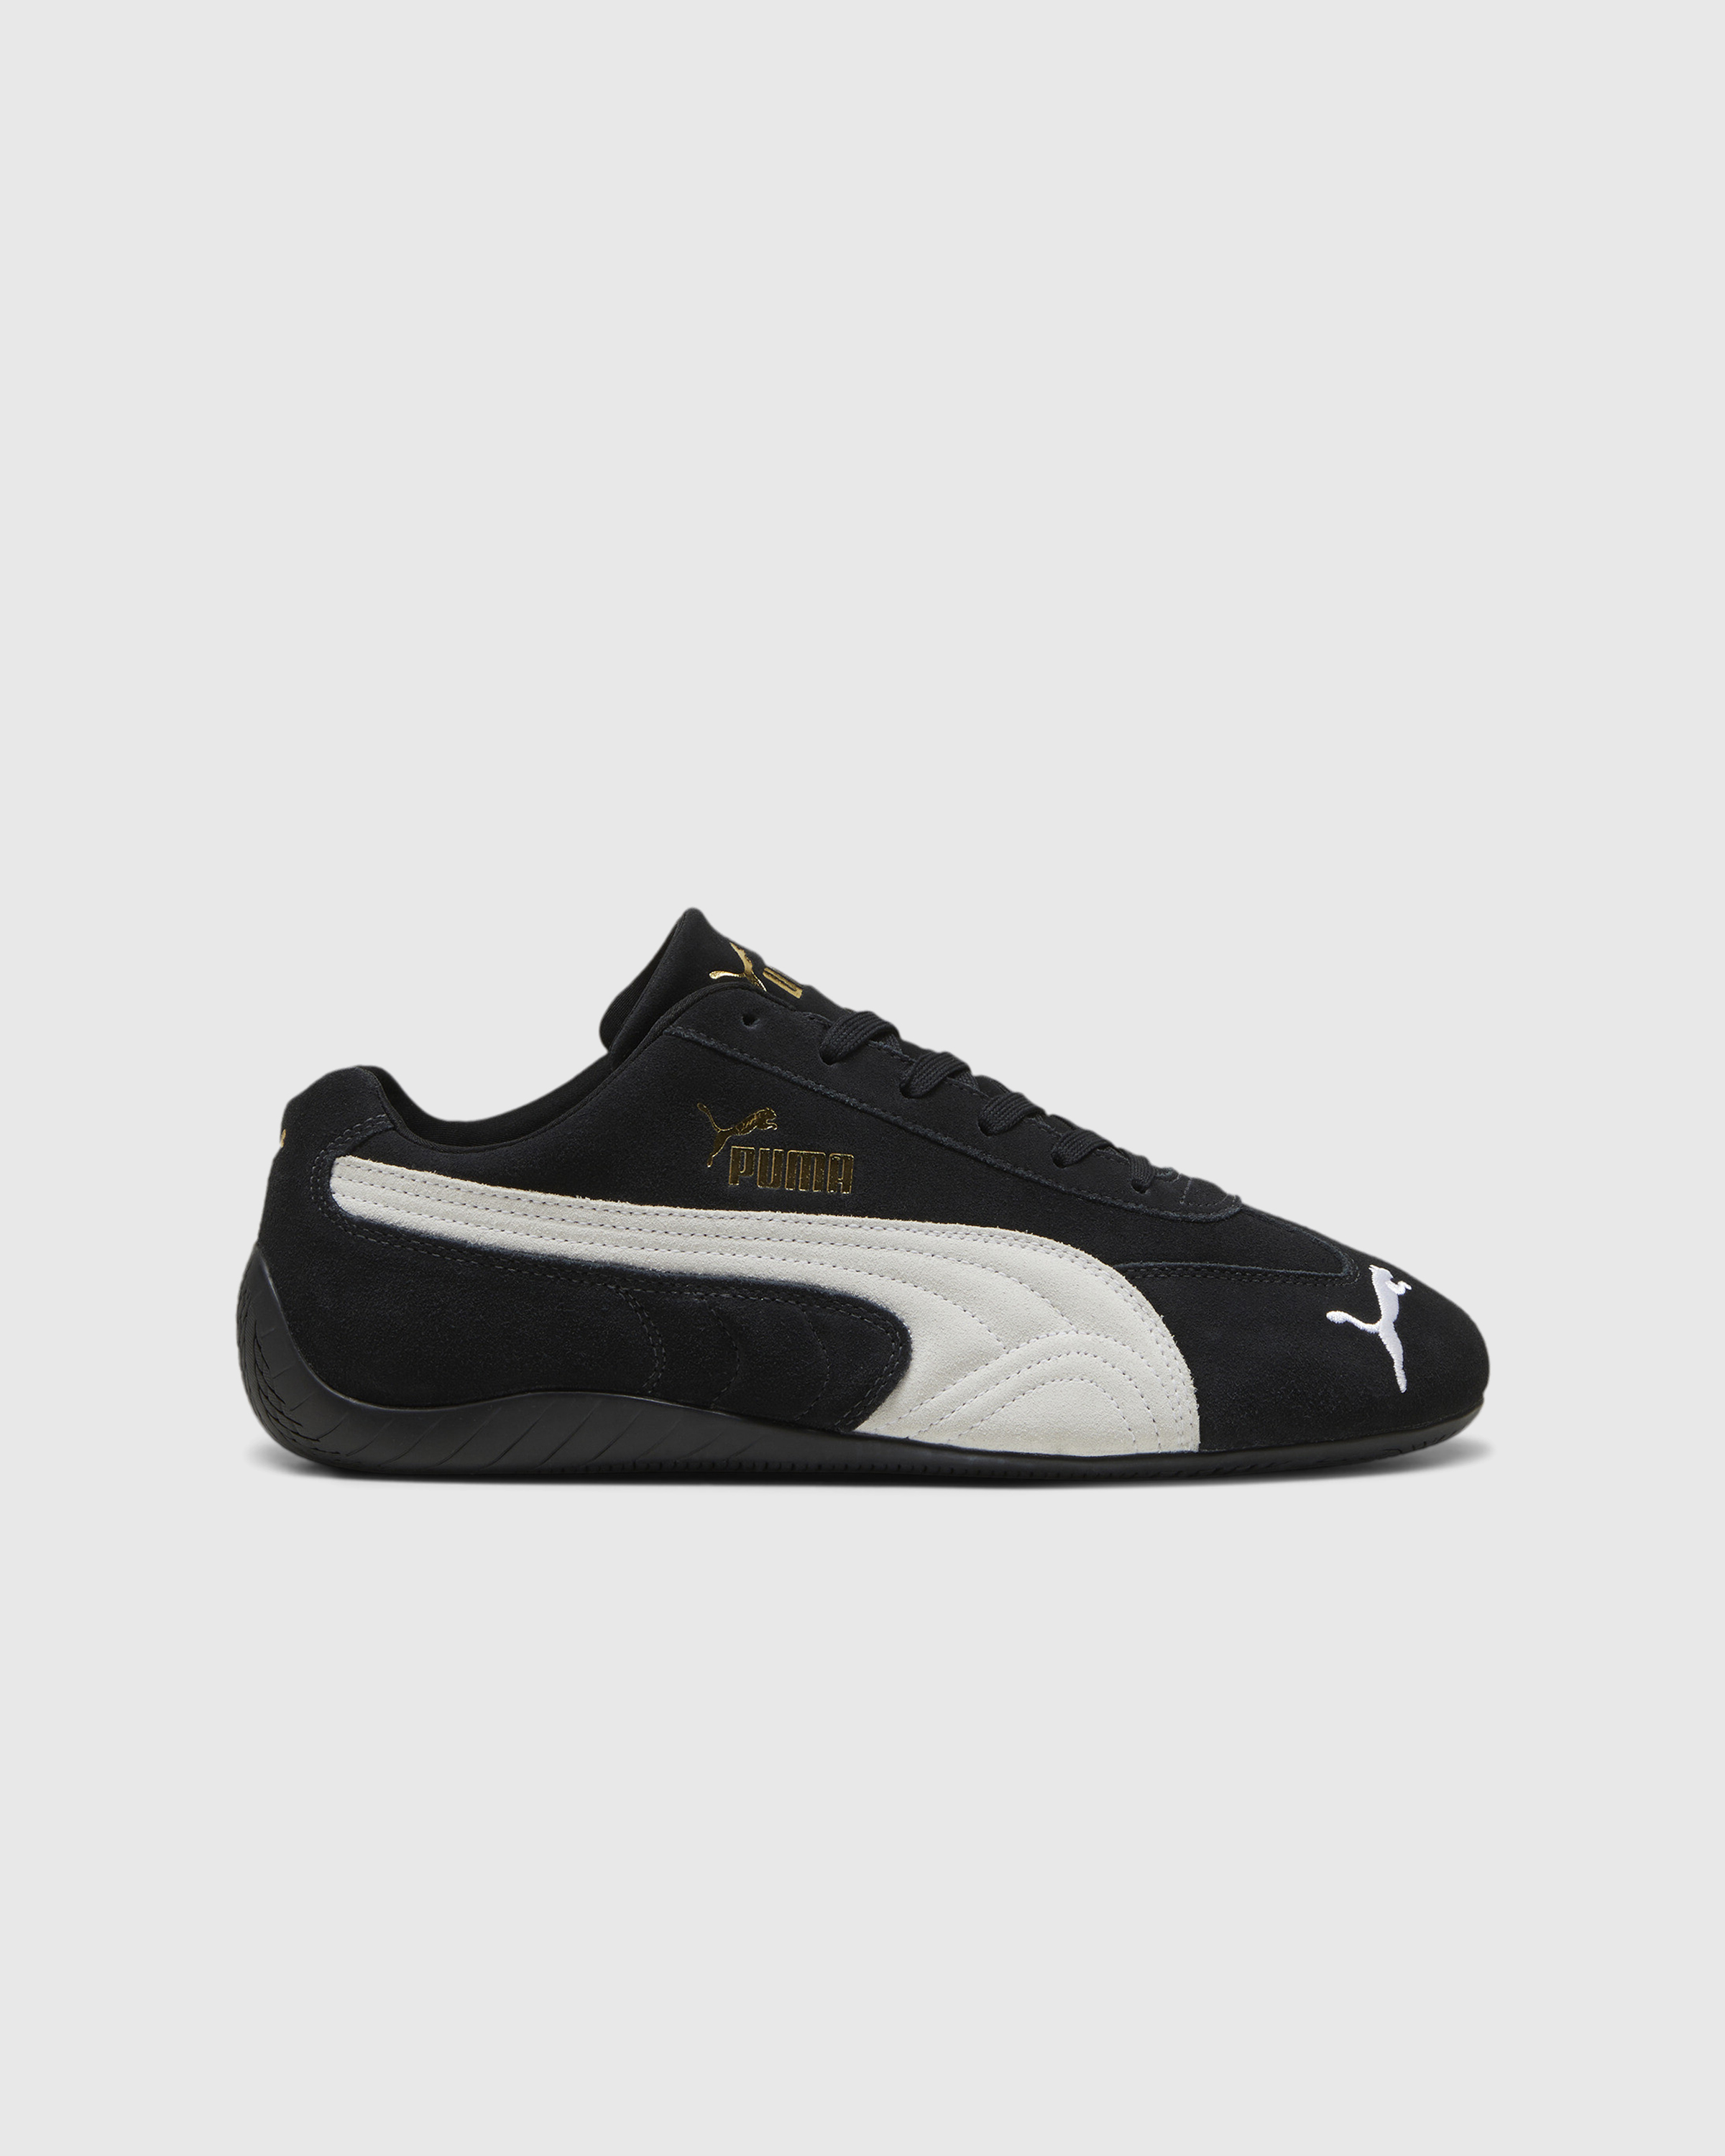 Puma – Speedcat OG Black/White - Low Top Sneakers - Black - Image 1